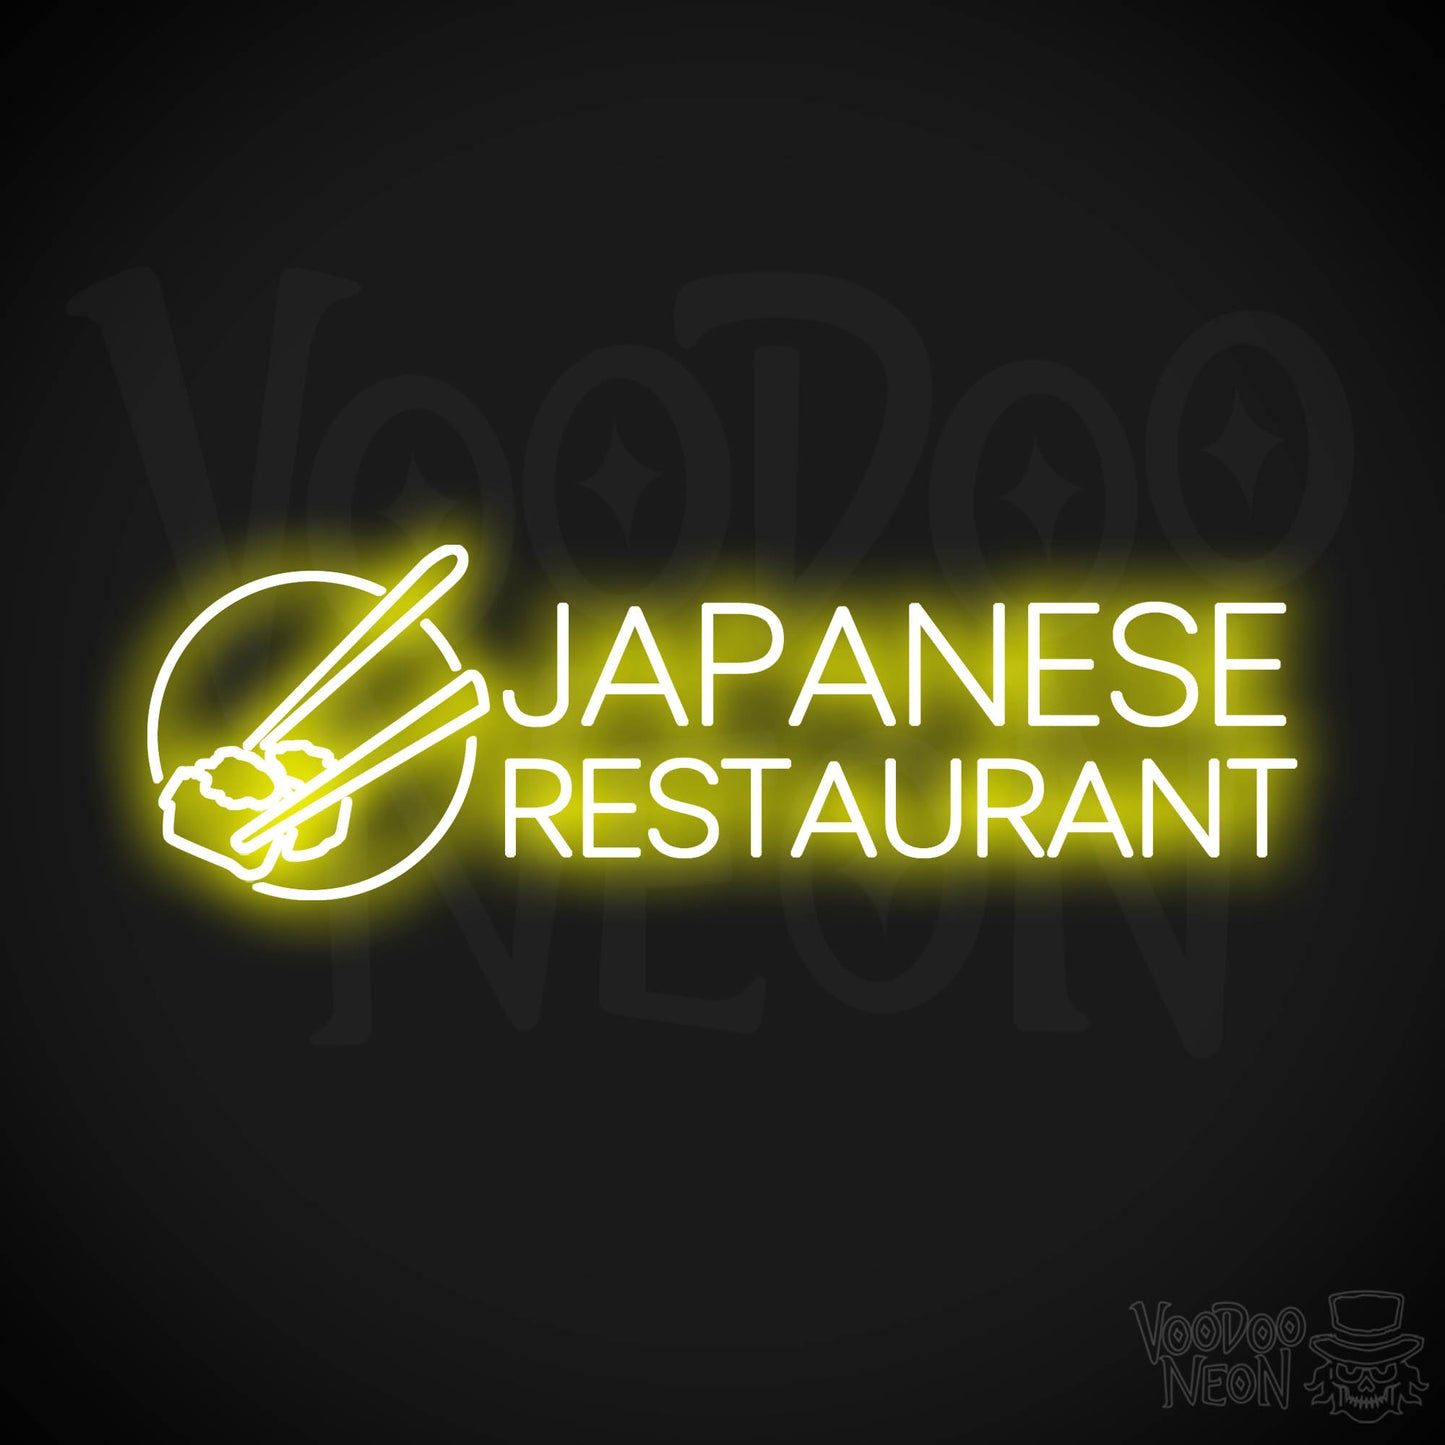 Japanese Restaurant LED Neon - Yellow